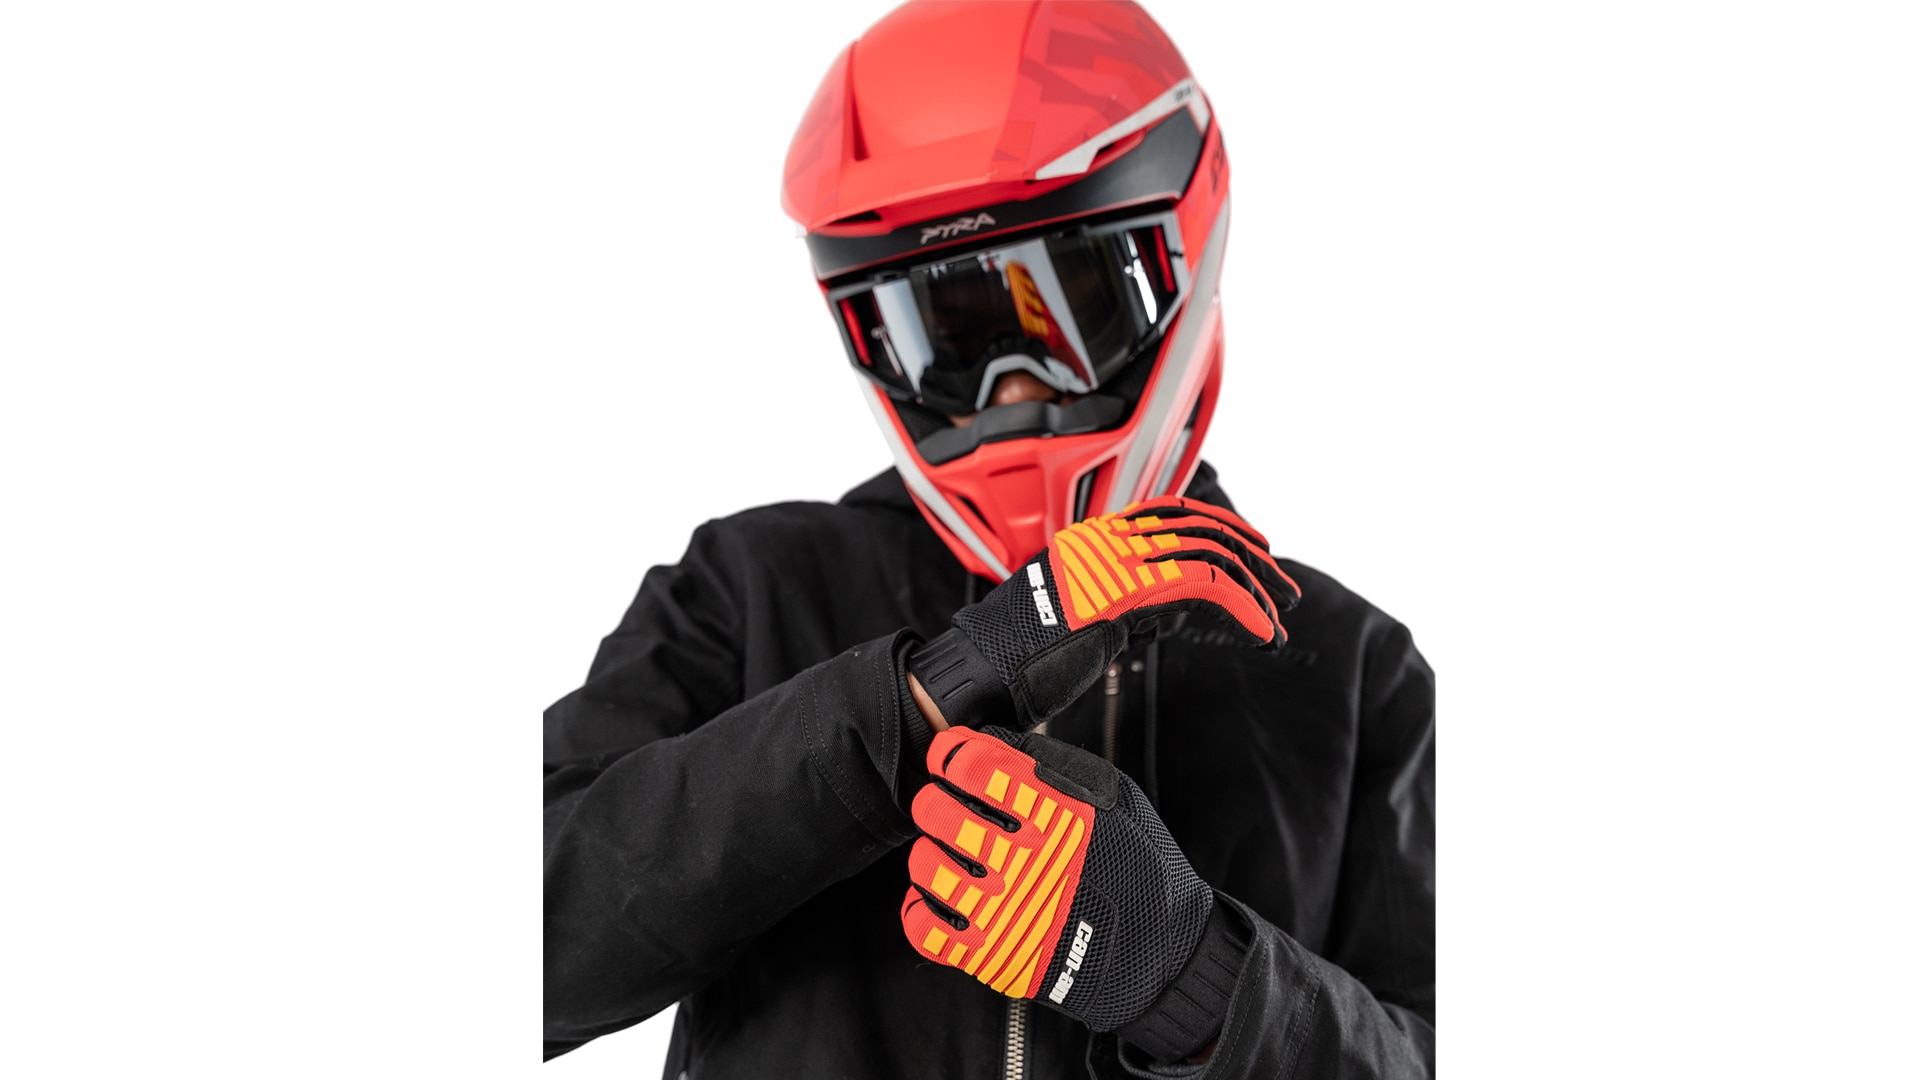 Rider wearing Steer Gloves.